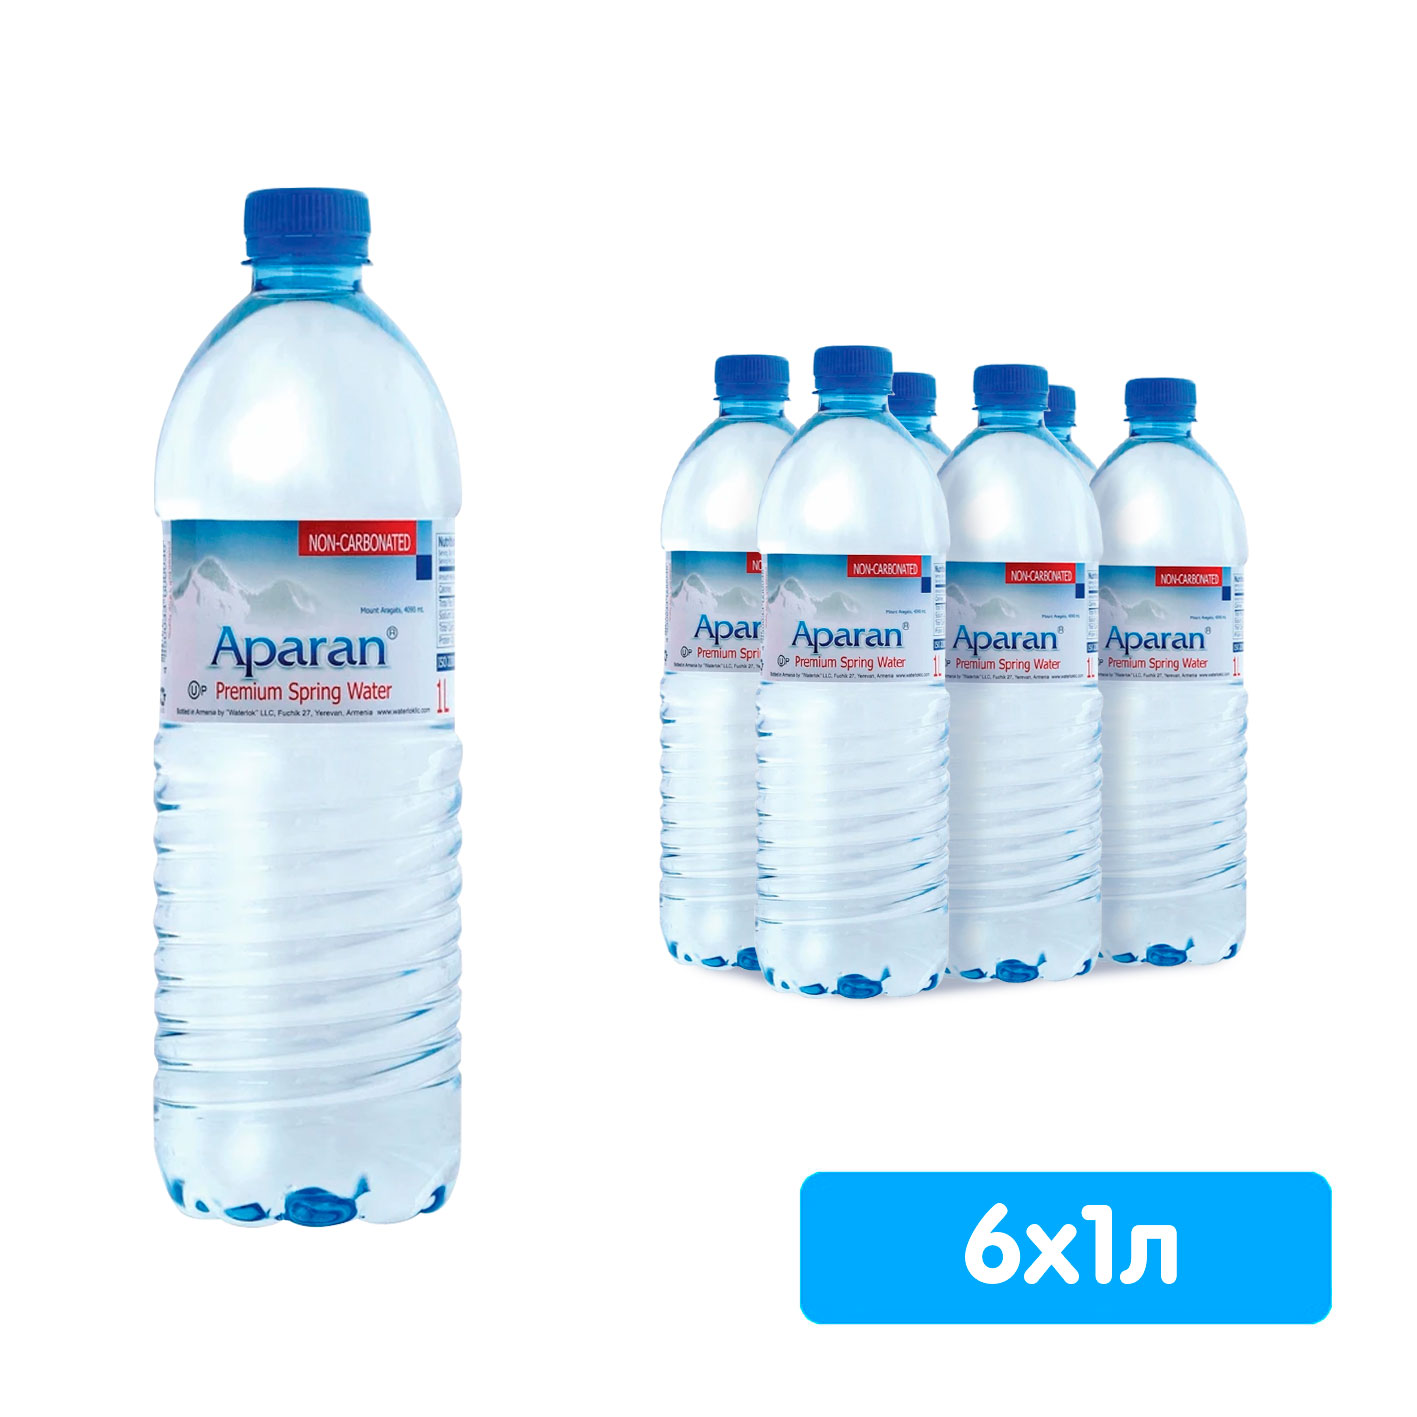 Вода Апаран 1 литр, без газа, пэт, 6 шт. в уп